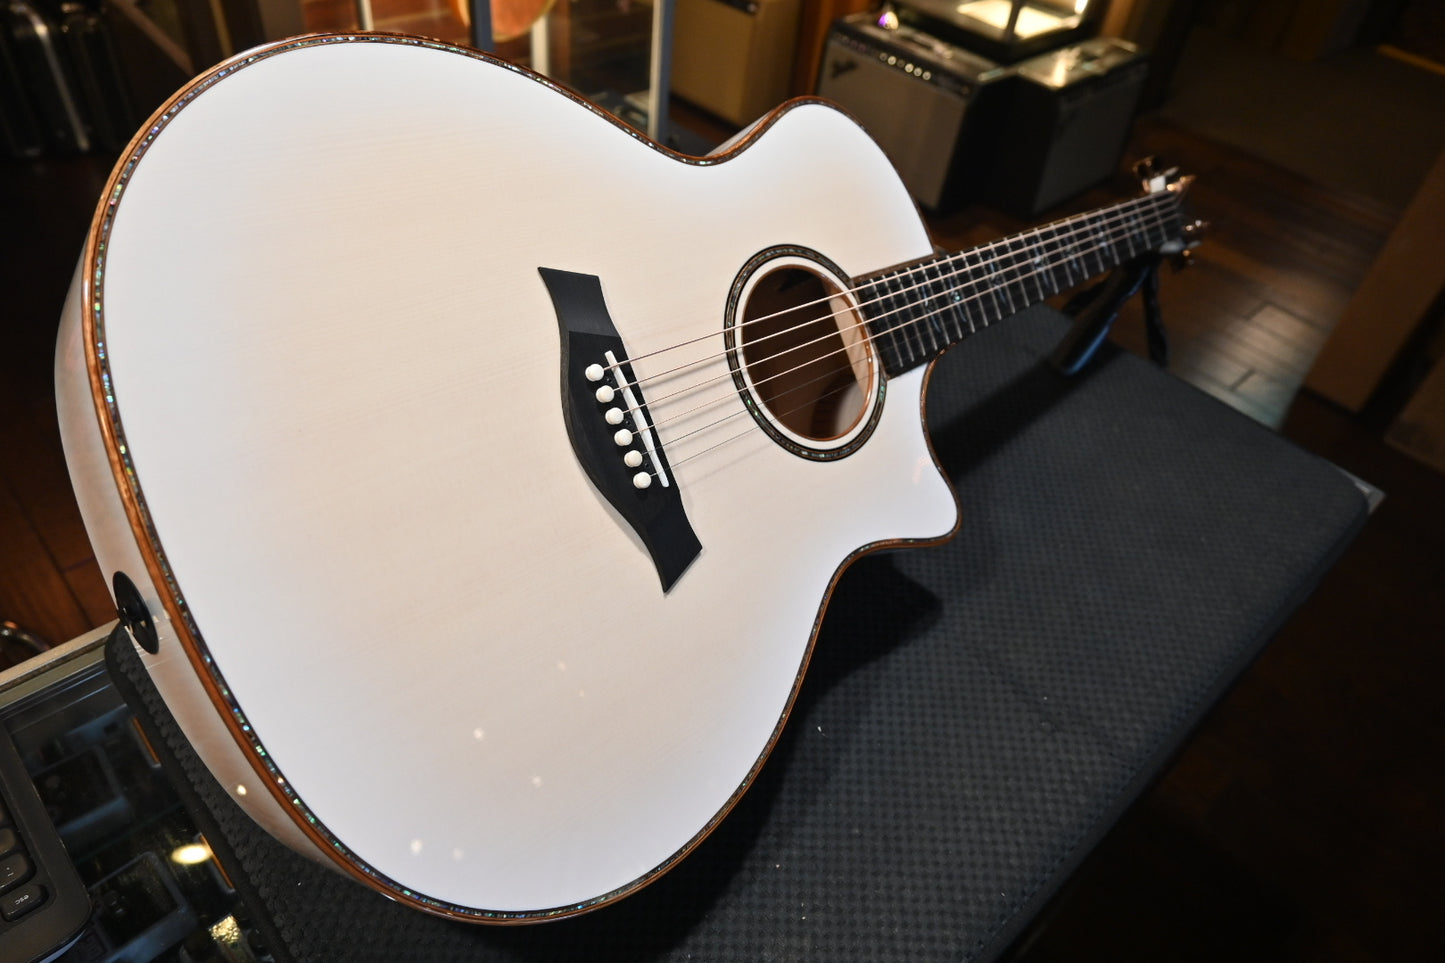 Taylor Custom GA Grand Auditorium Lutz Spruce/Big Leaf Maple Catch #22 - Translucent White Guitar #3155 w/ Taylor buy one get a GS Mini for $199 Promo! - Danville Music